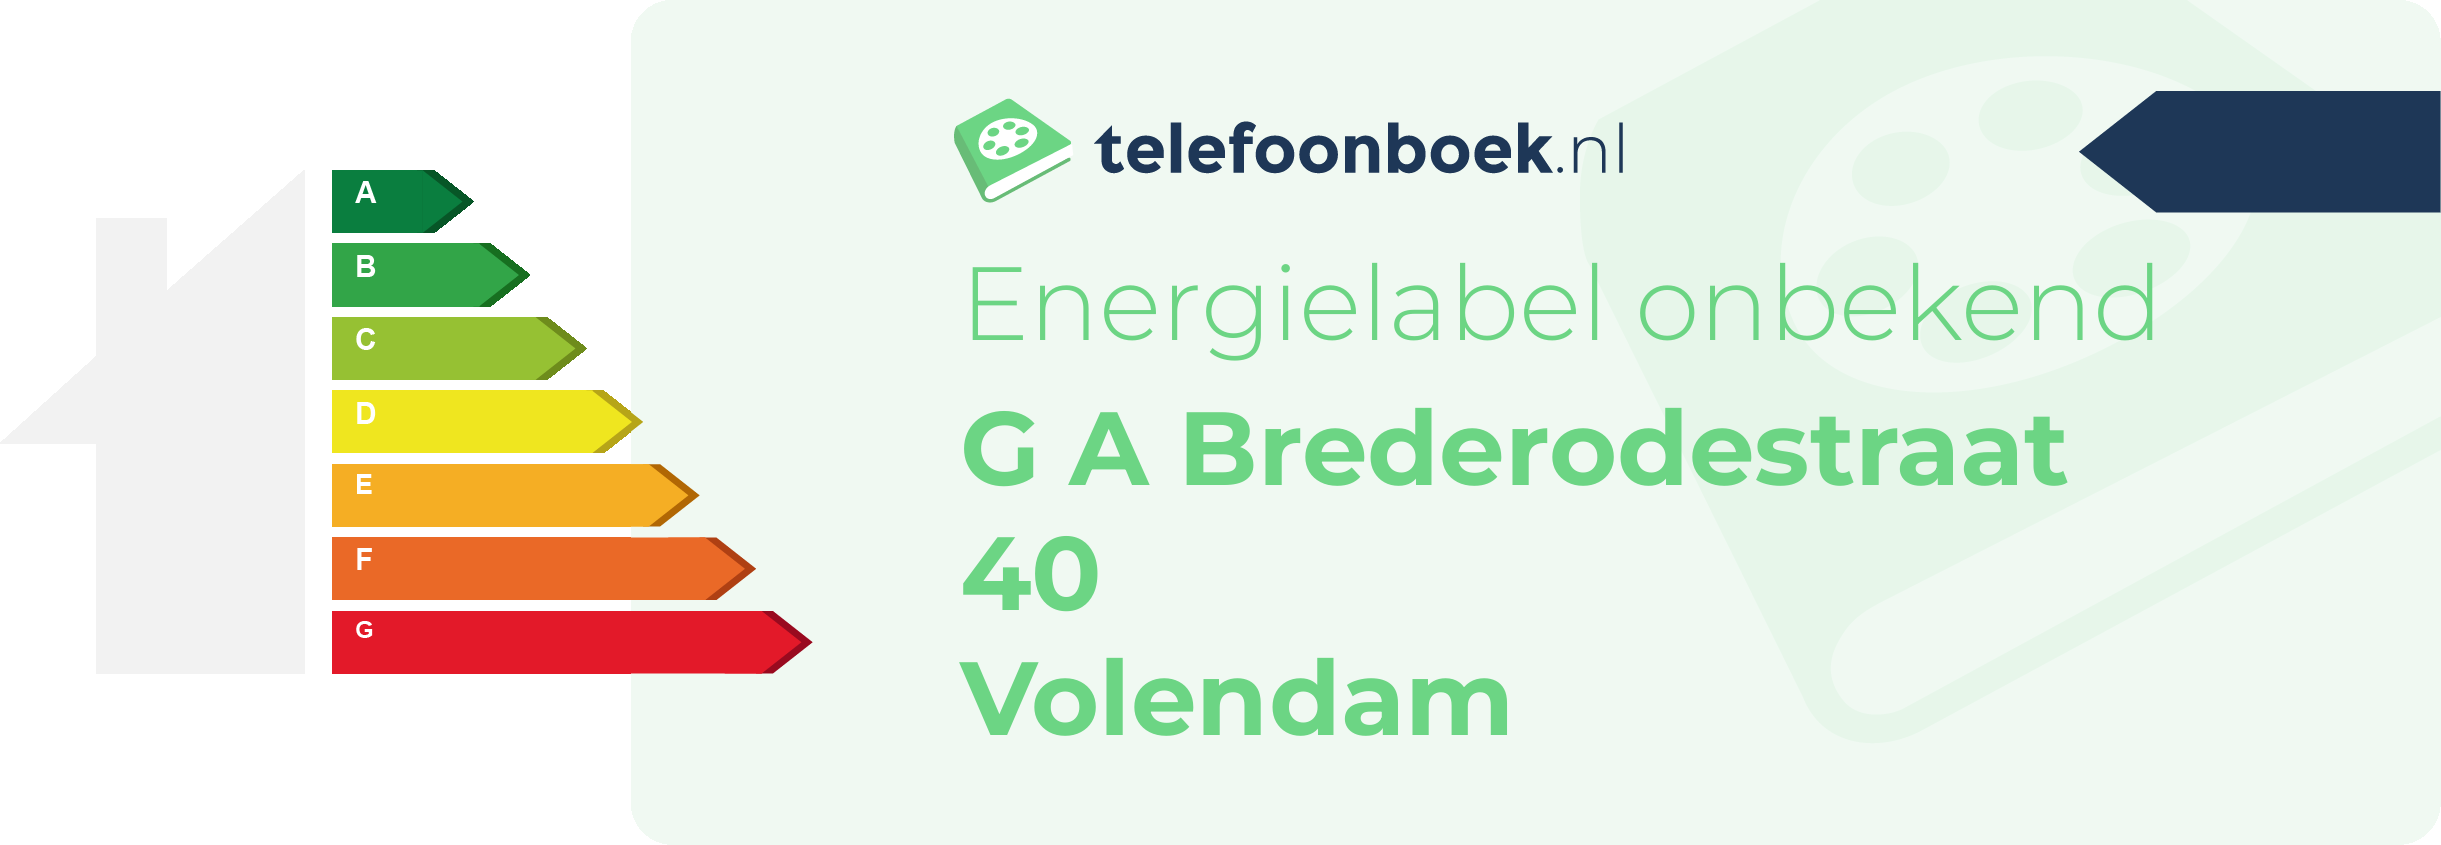 Energielabel G A Brederodestraat 40 Volendam